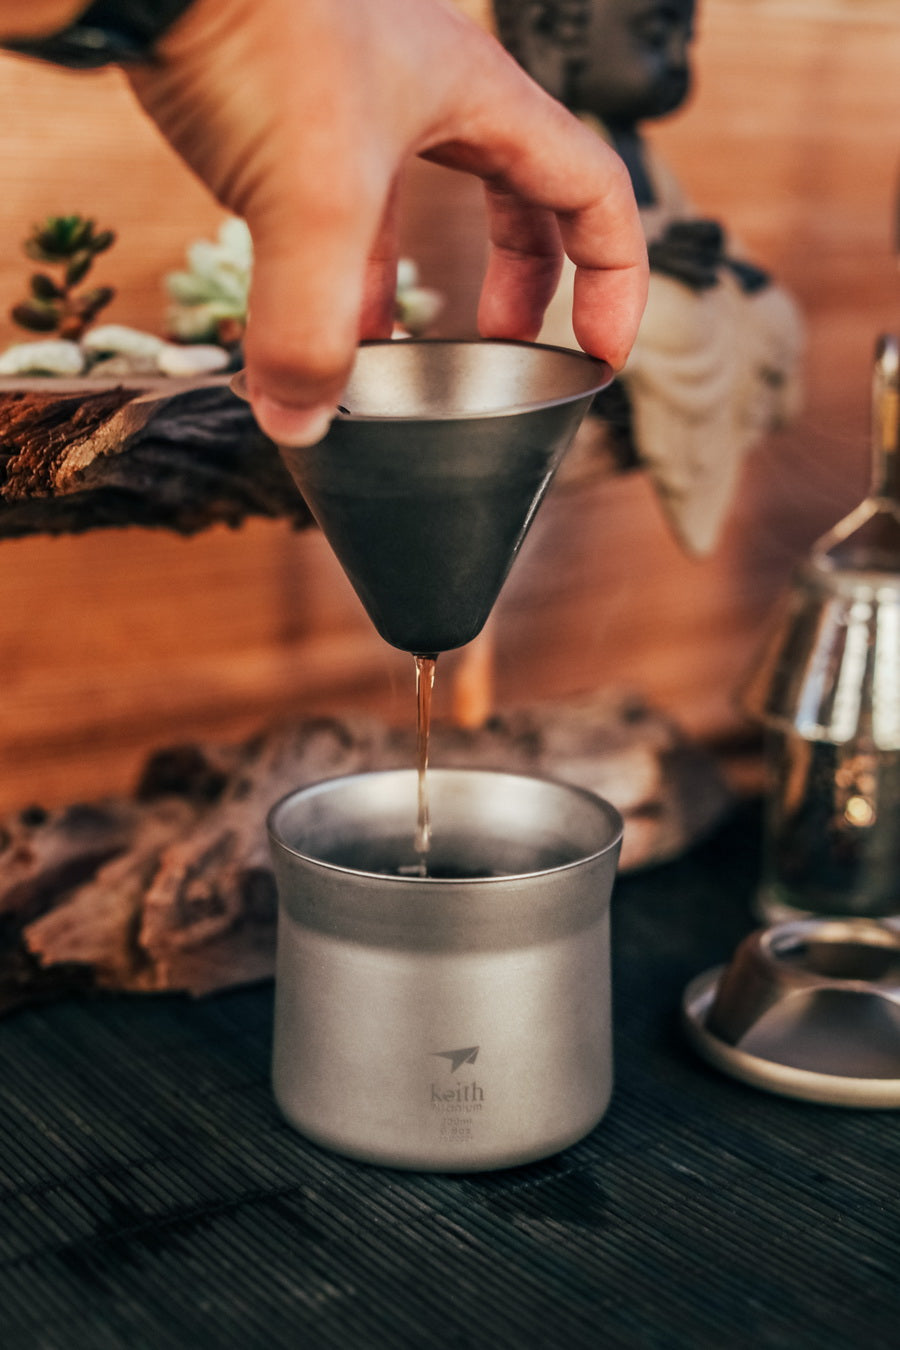 Keith Titan Kaffee - Tee Maker